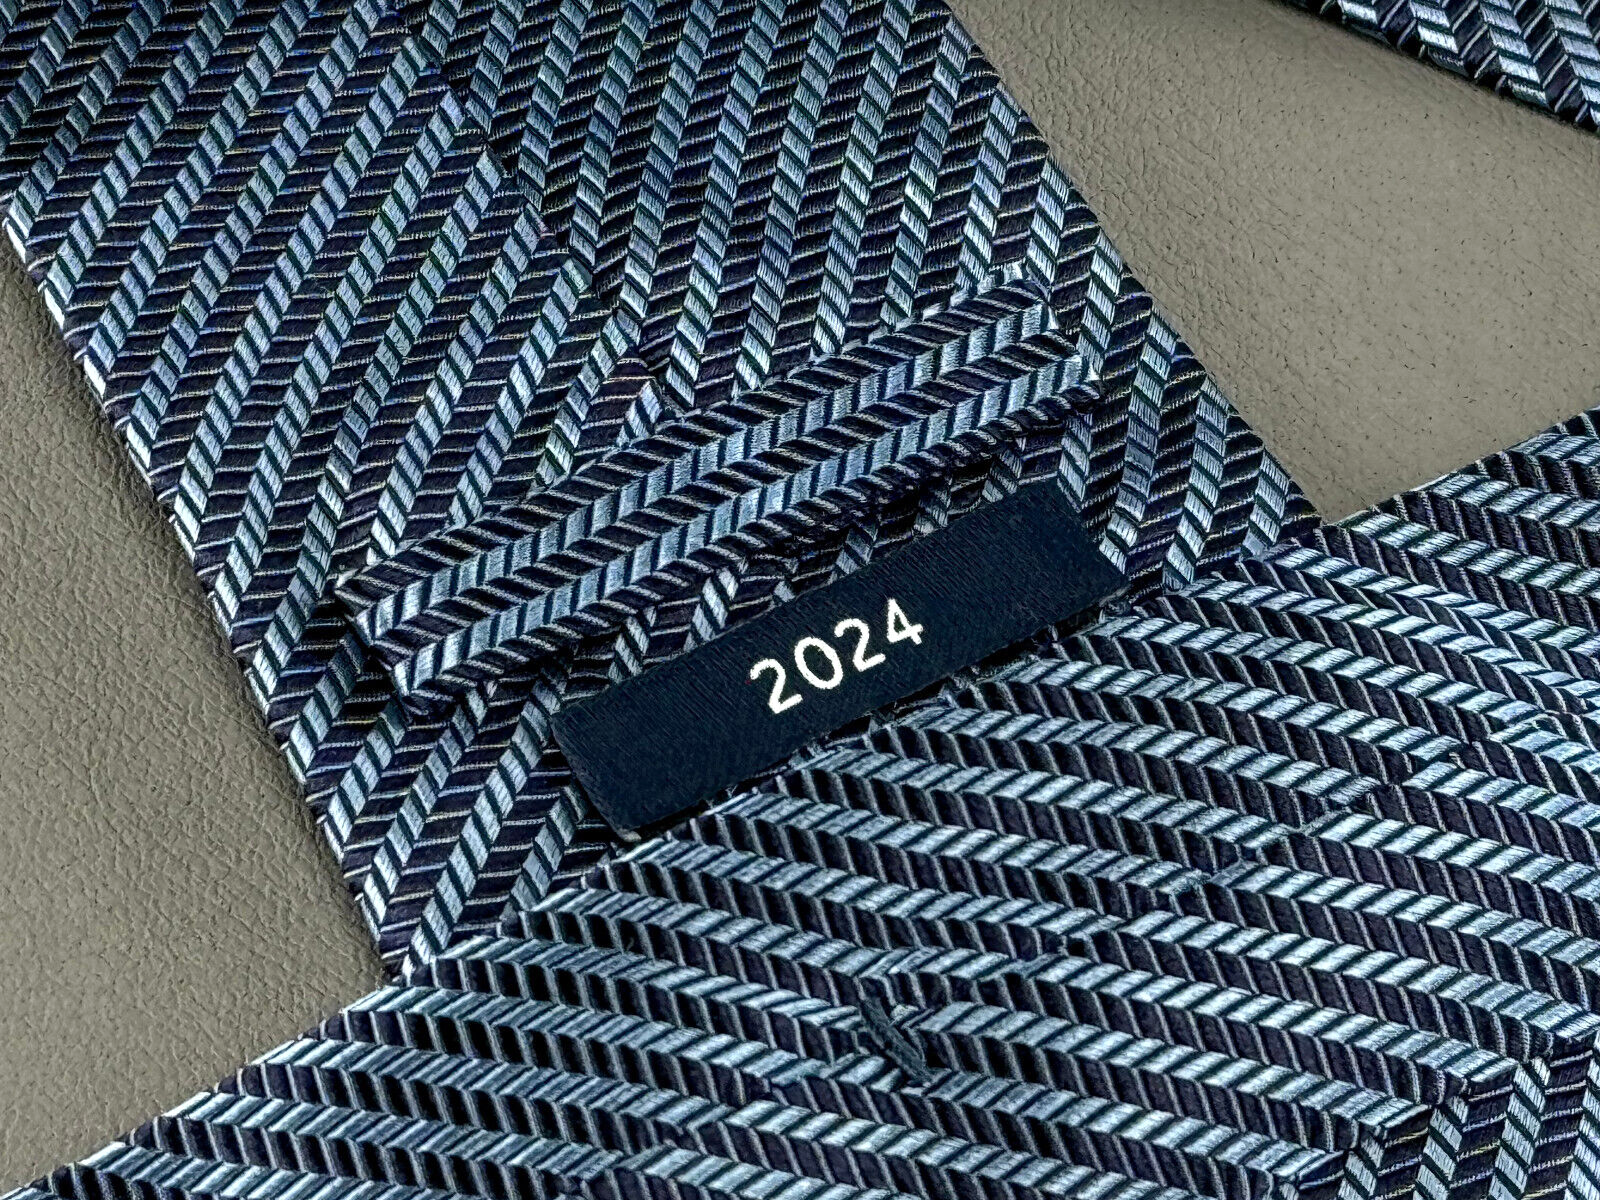 Patek Philippe Tie Blue 100% Silk 